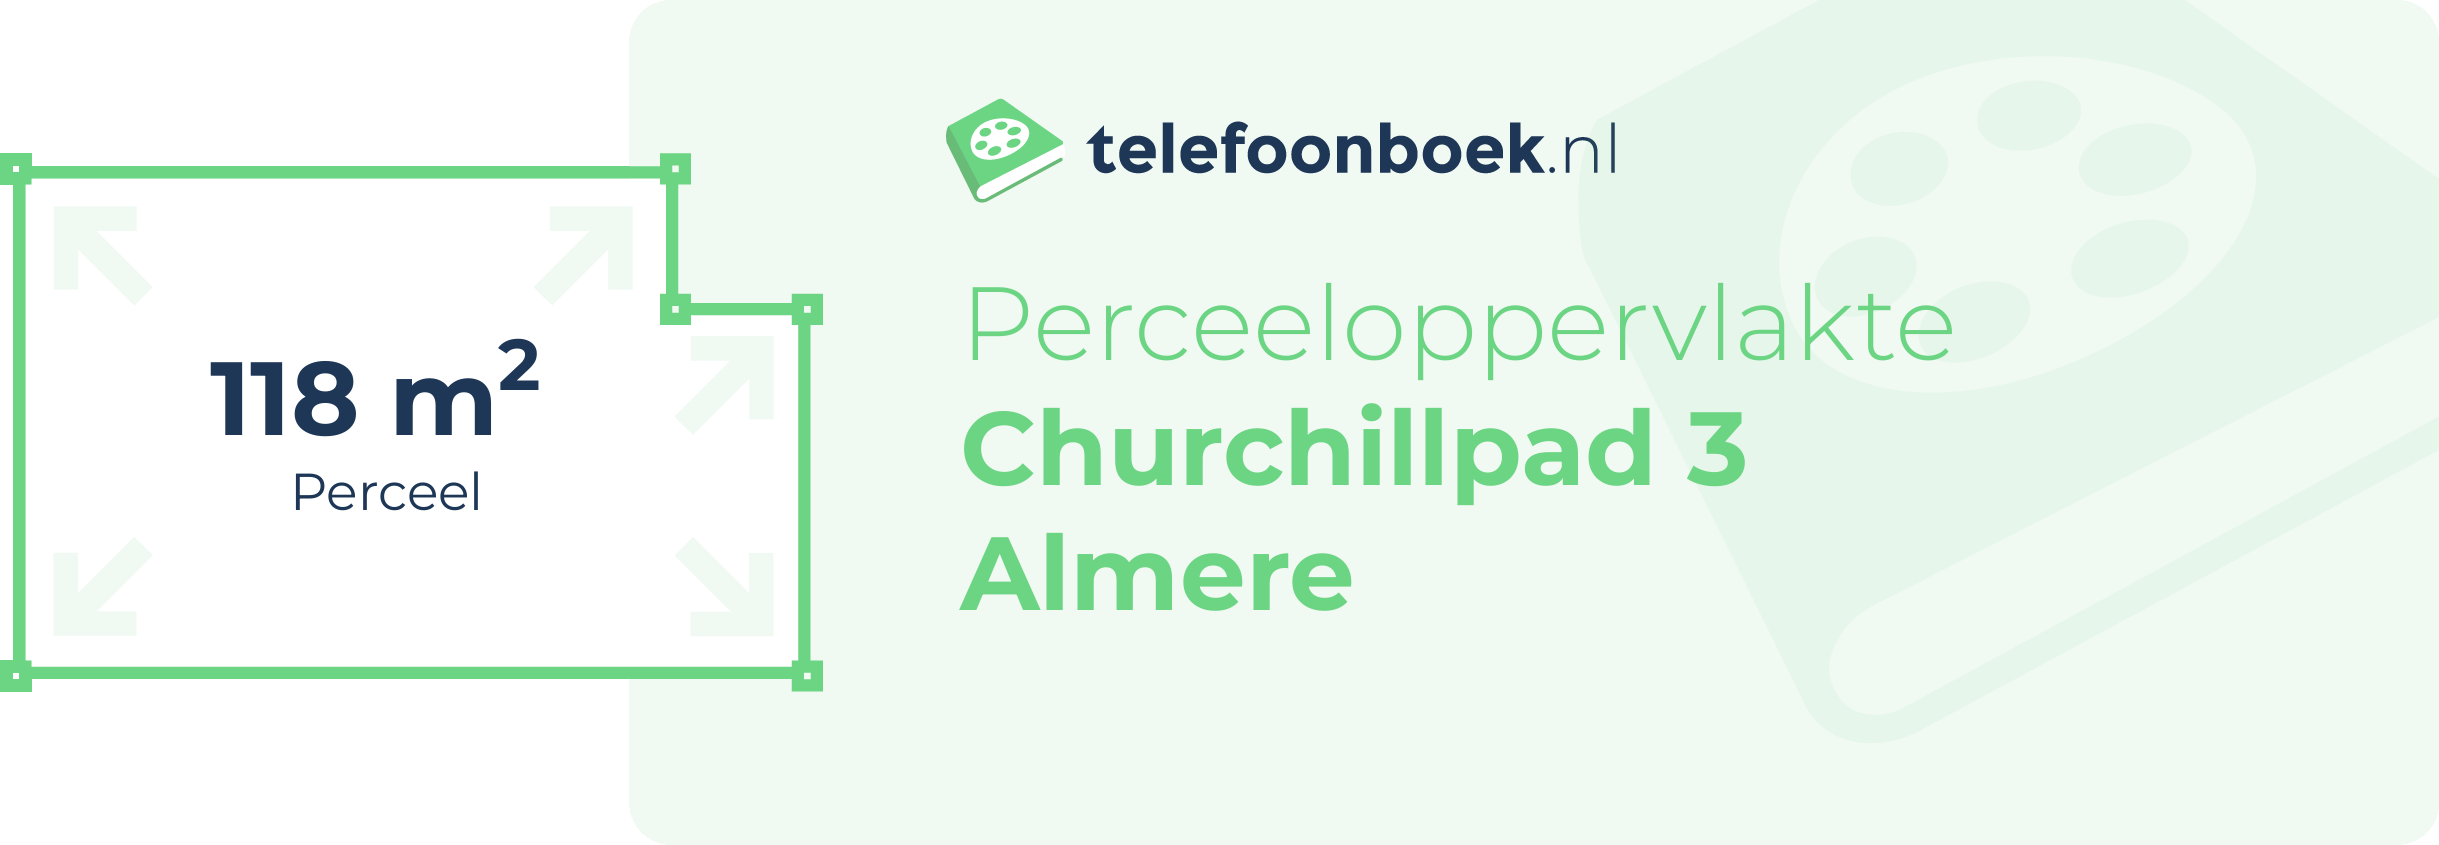 Perceeloppervlakte Churchillpad 3 Almere